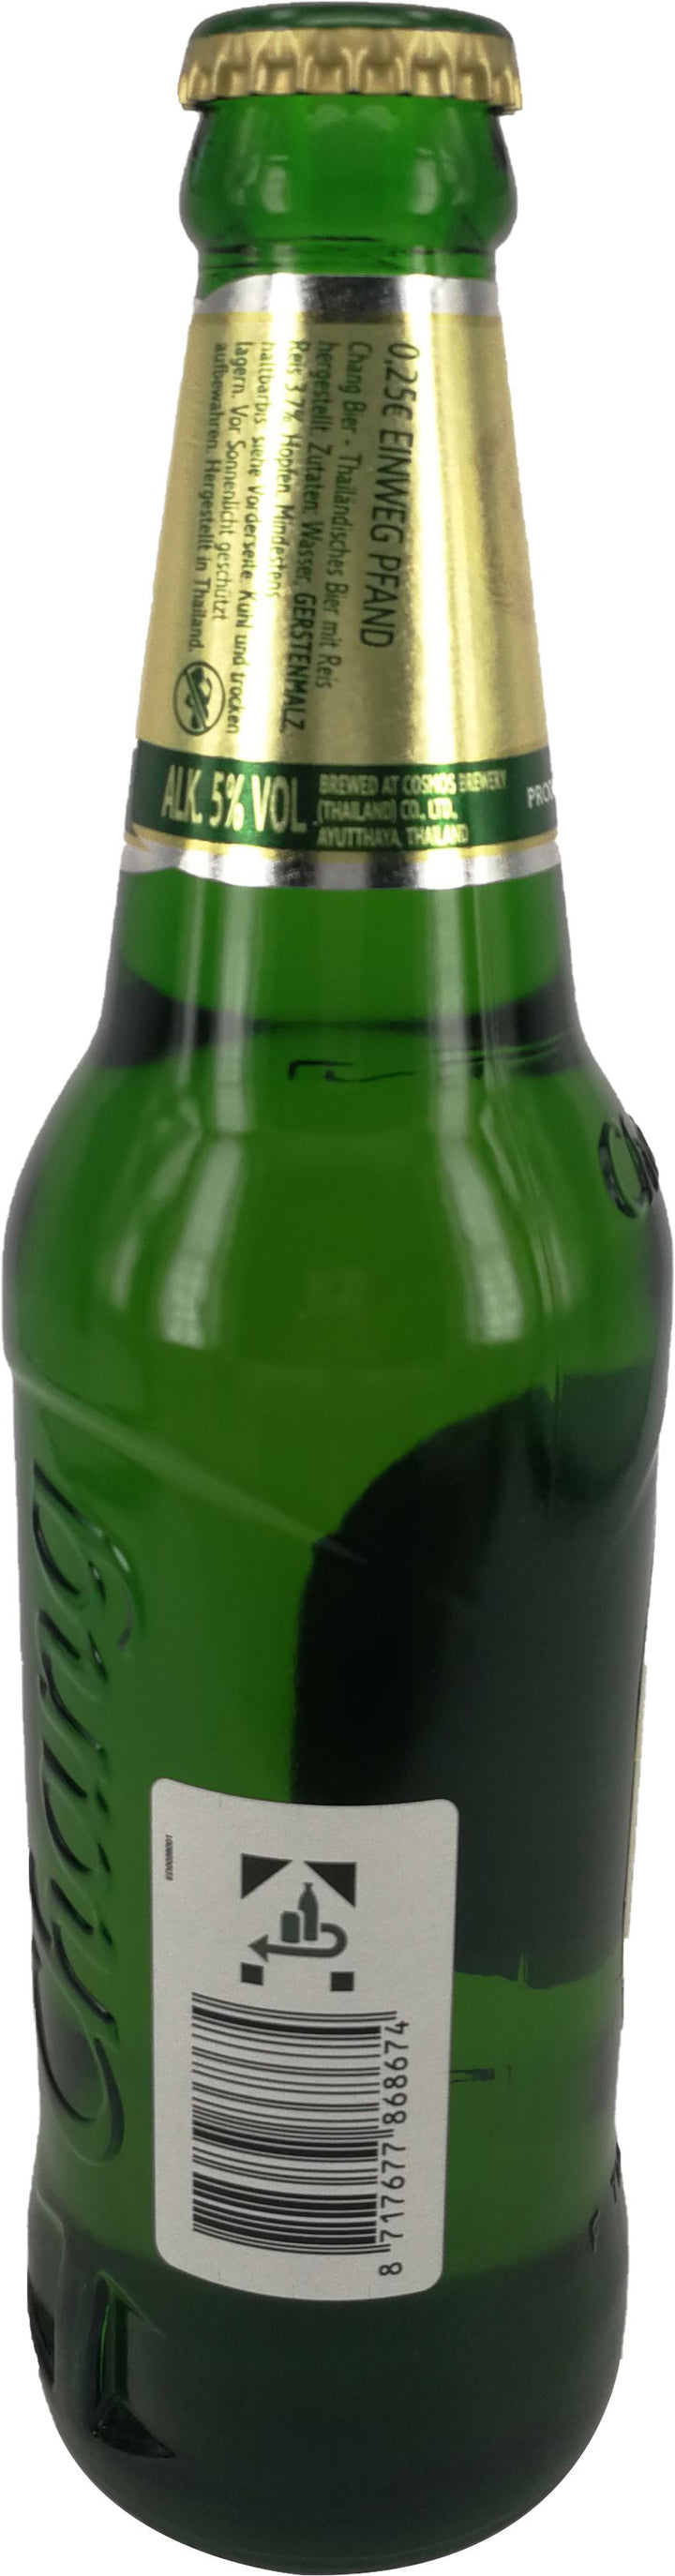 象牌 啤酒 320ml/ Bier 5% Vol. 320ml Chang